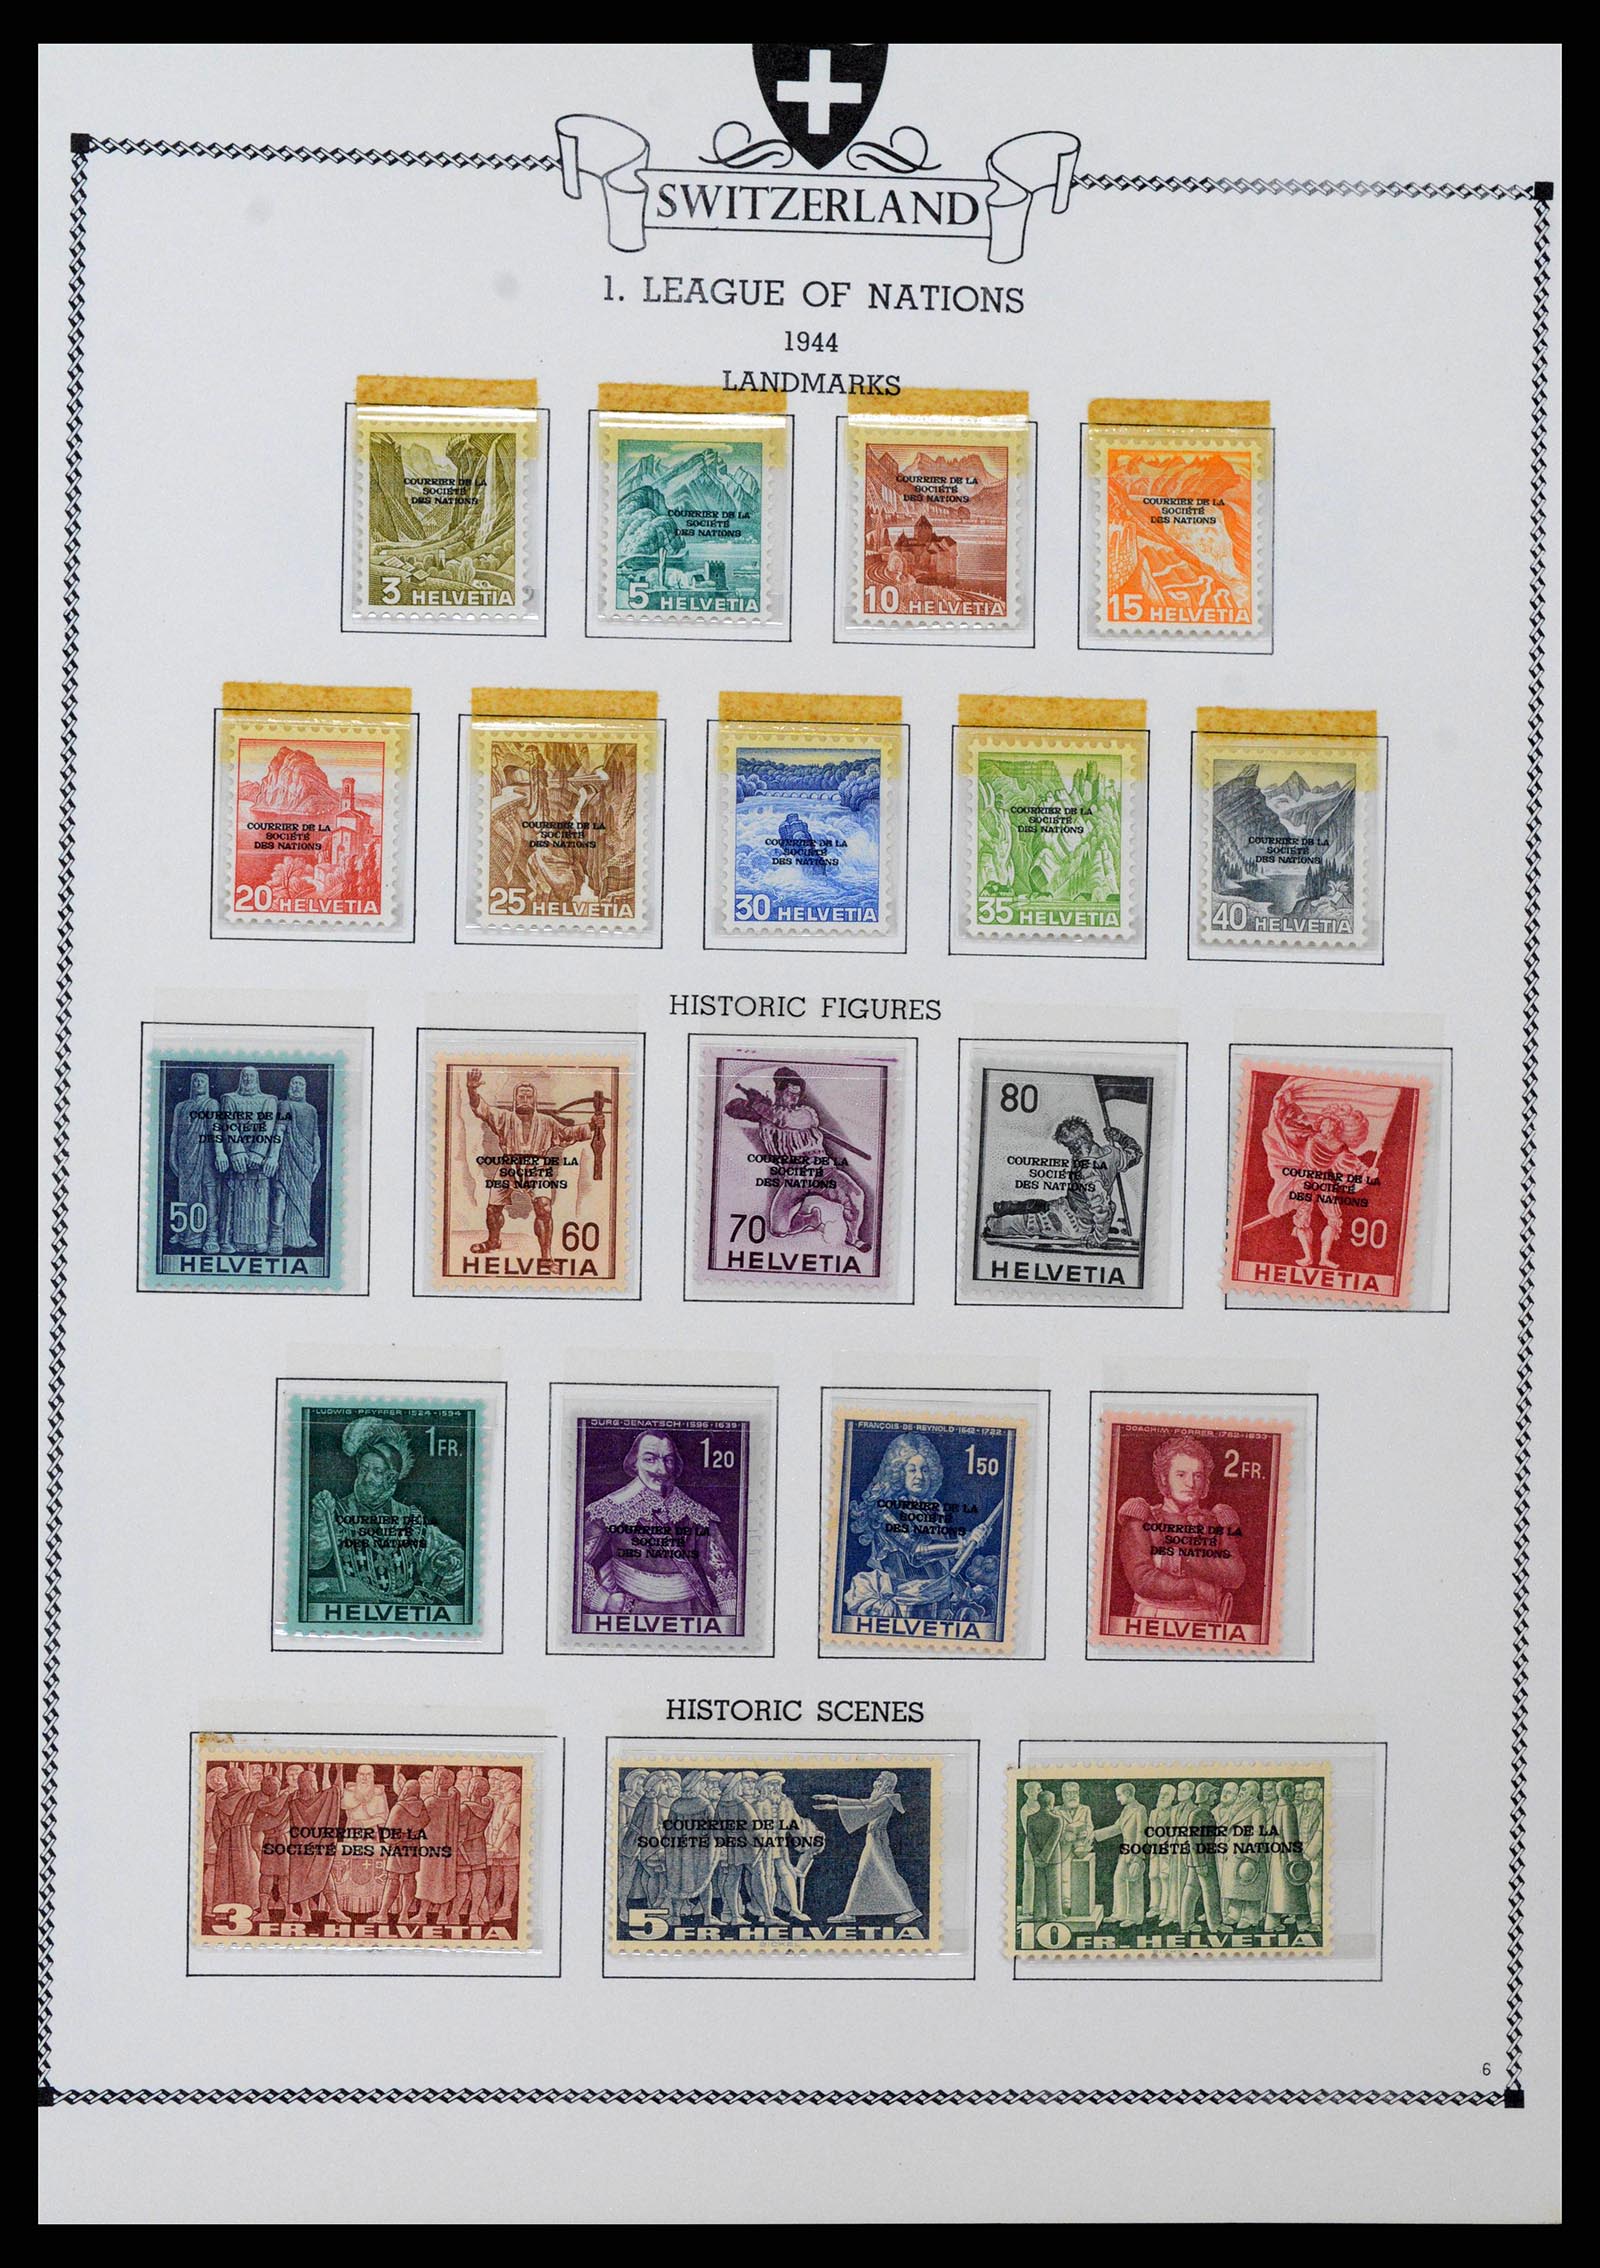 38905 0190 - Stamp collection 38905 Switzerland 1850-1995.